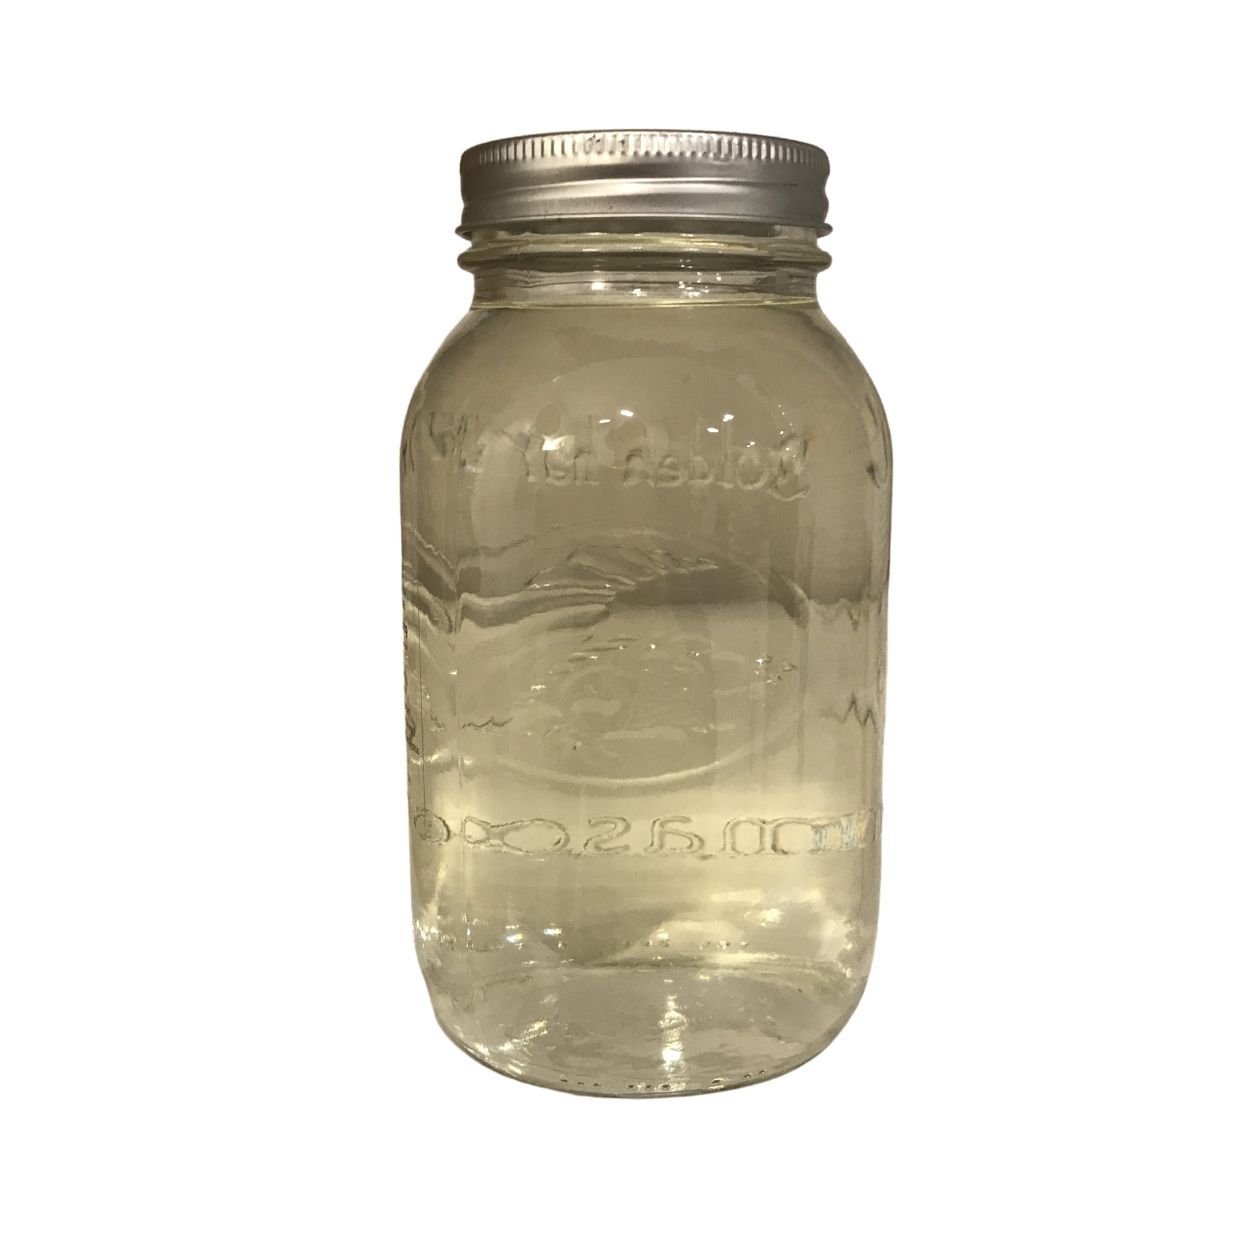 Hand Sanitizer Gel Home Green Cricket 1L REFILL in mason jar with $1.25 deposit price Prettycleanshop